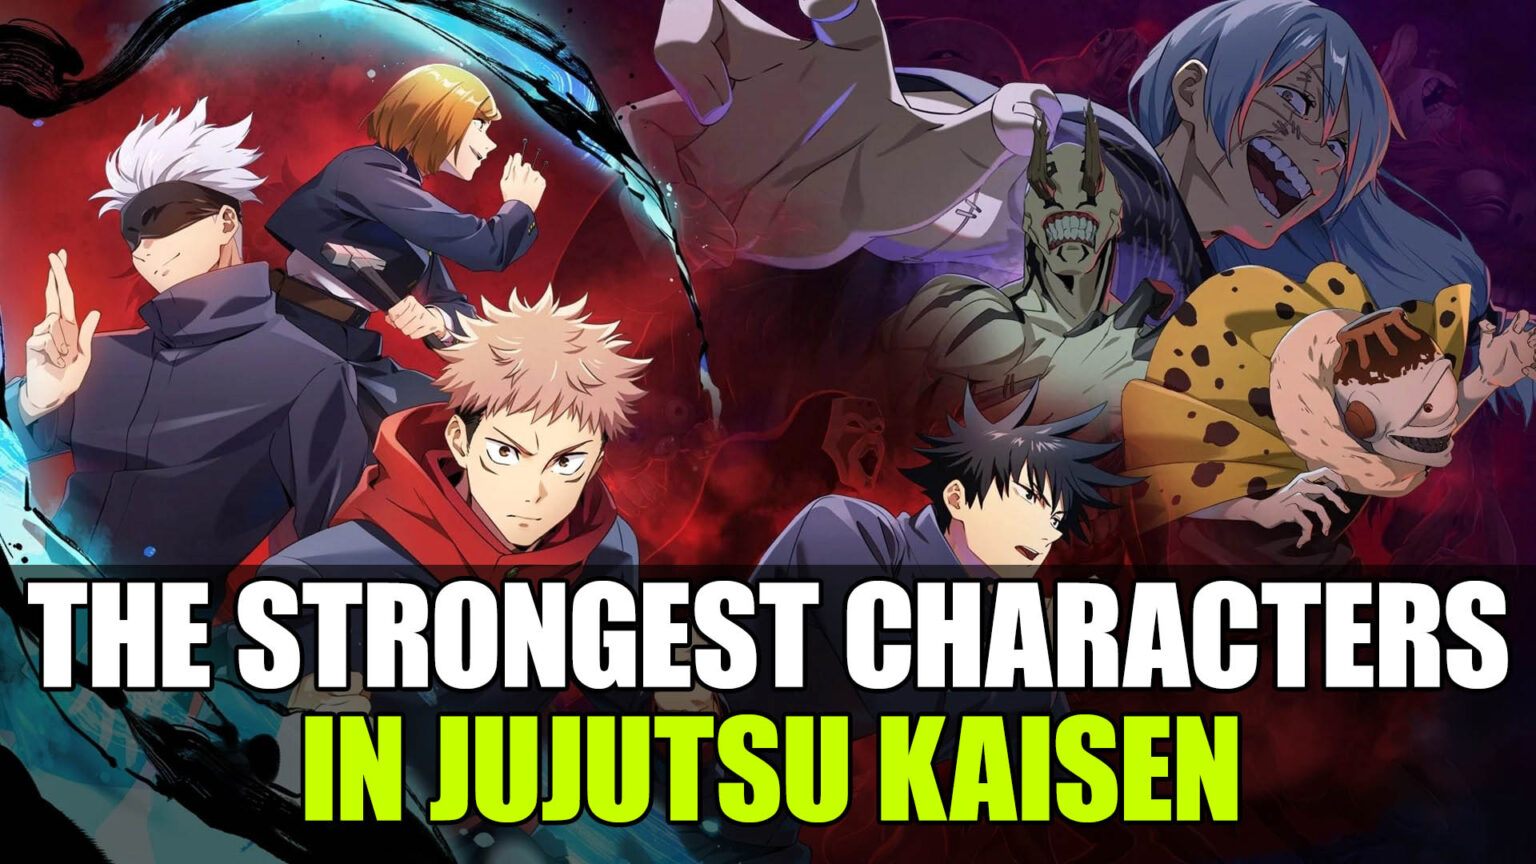 Jujutsu Kaisen Strongest characters